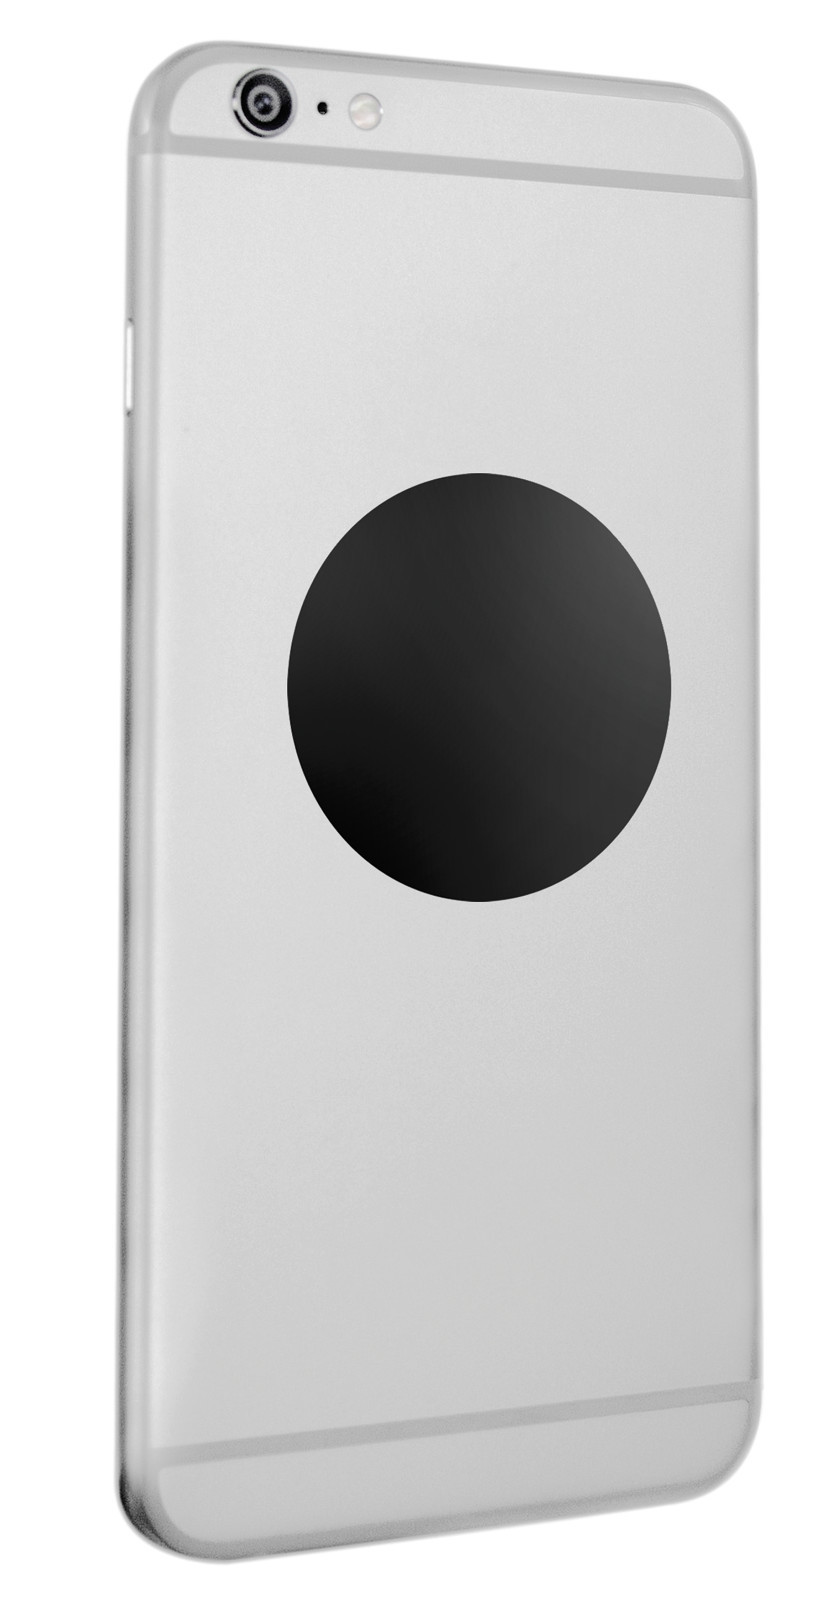 Suport telefon mobil magnetic cu ventuza Magneto Elevator thumb